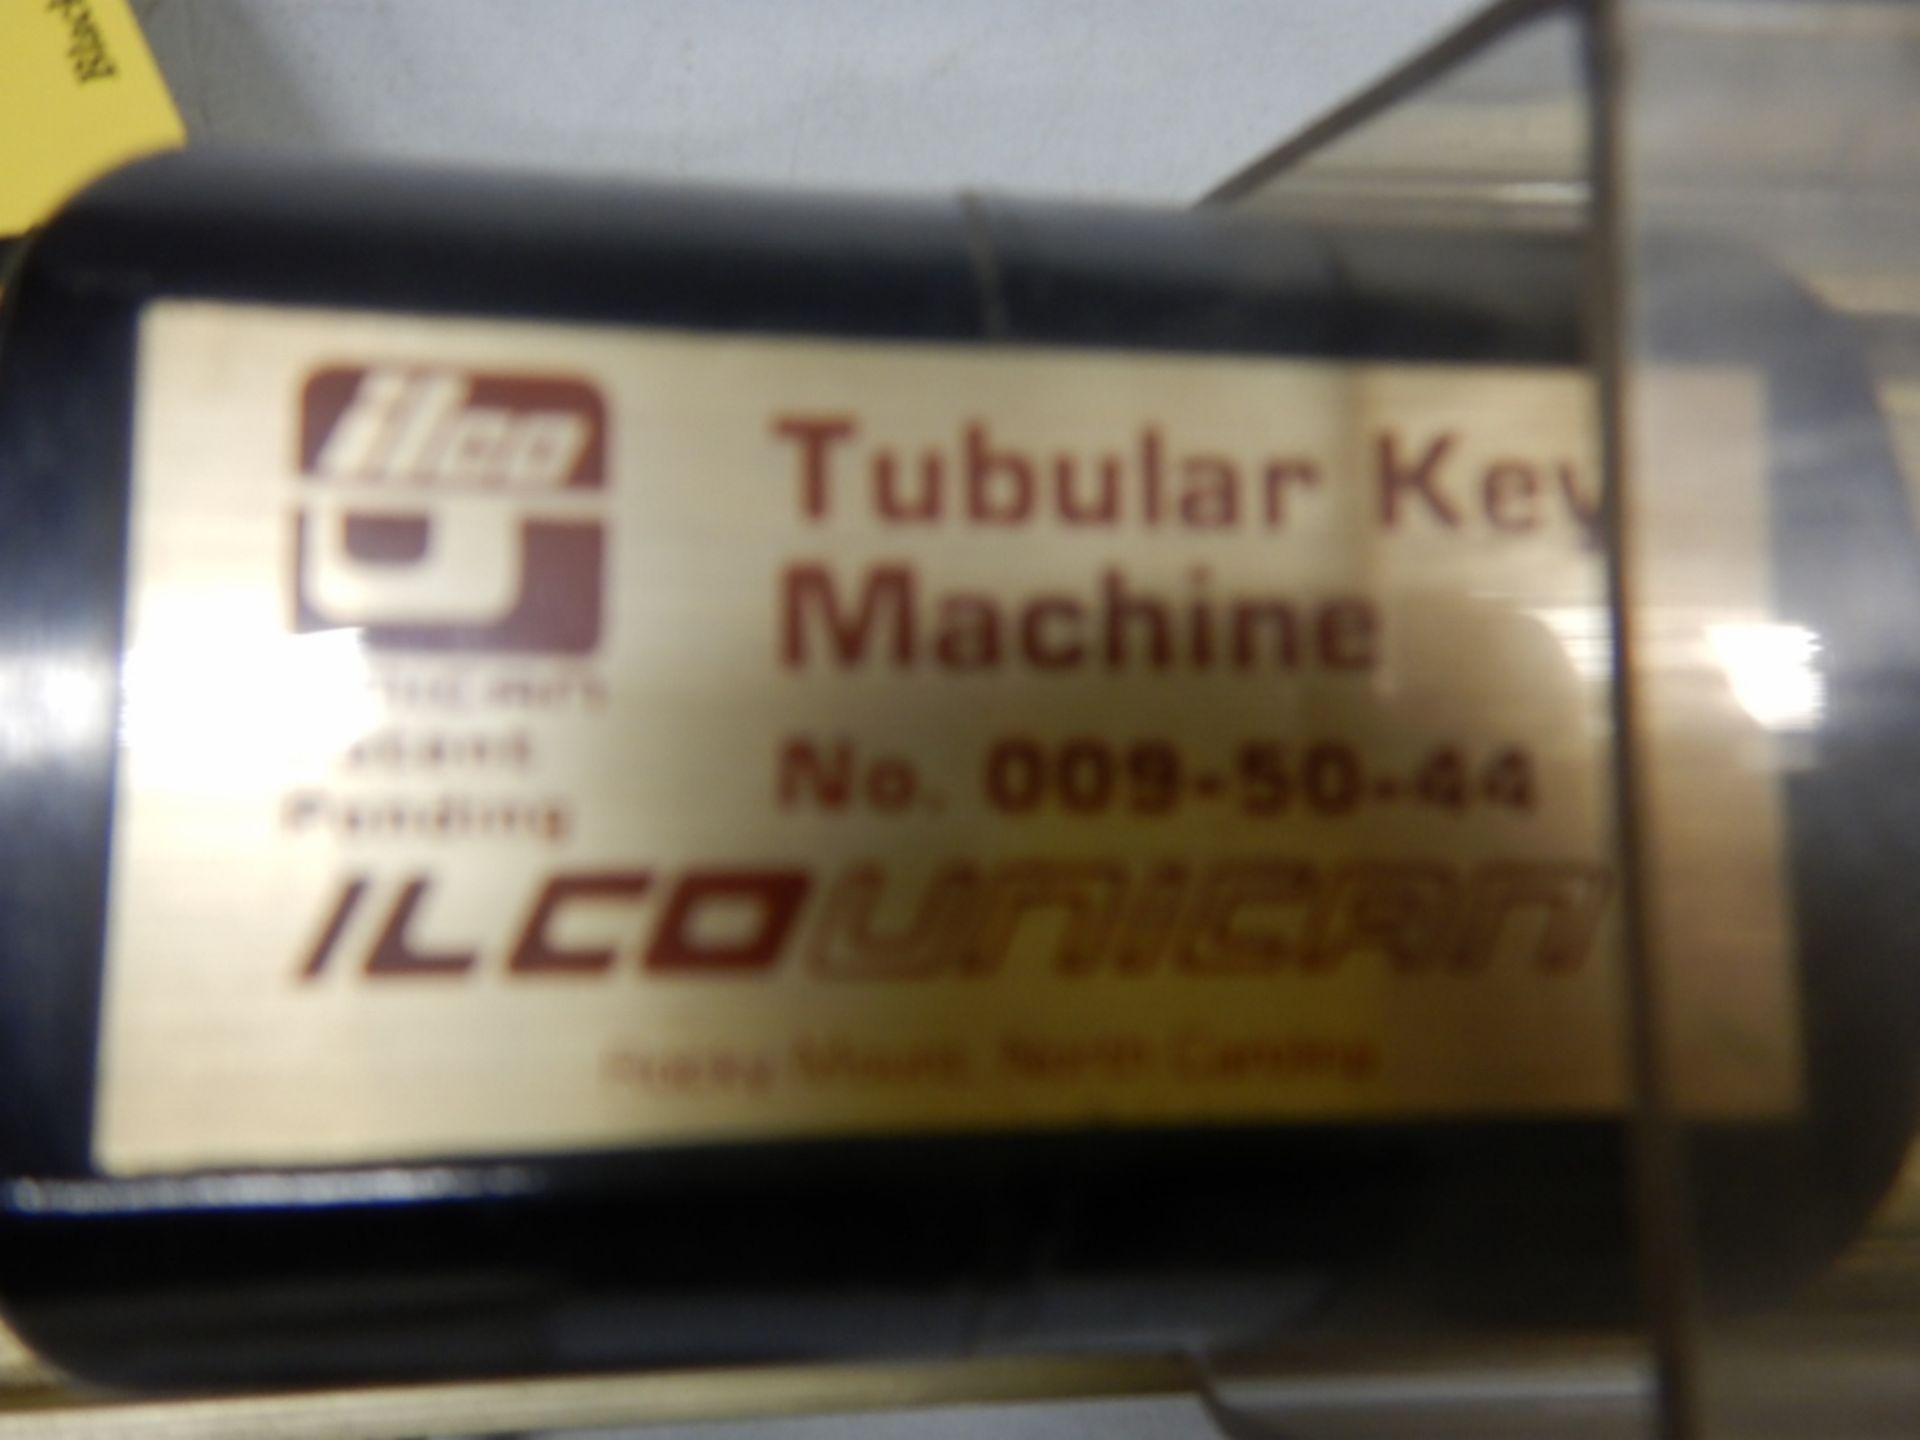 ILCO TUBULAR KEY MACHINE S/N F001376 MOD. 009-50-44 - Image 4 of 4